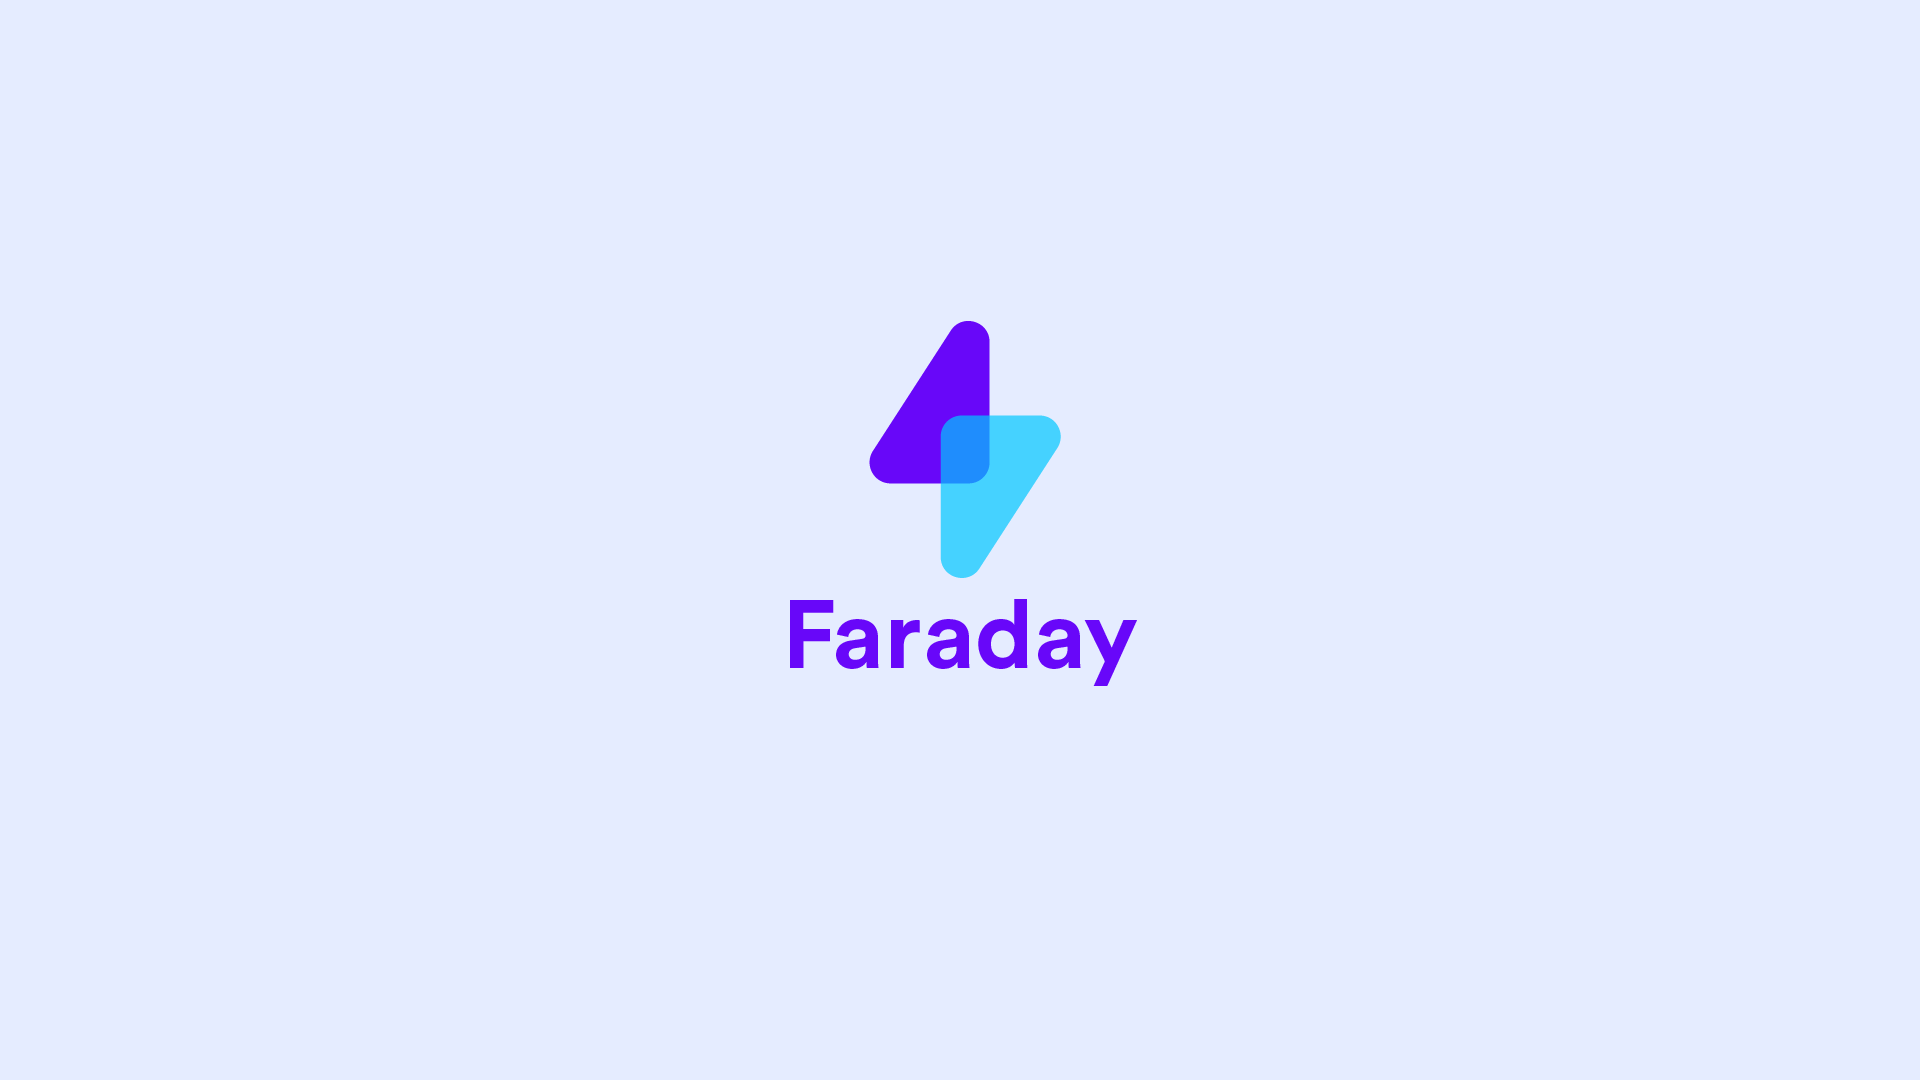 Faraday_16_v01.png